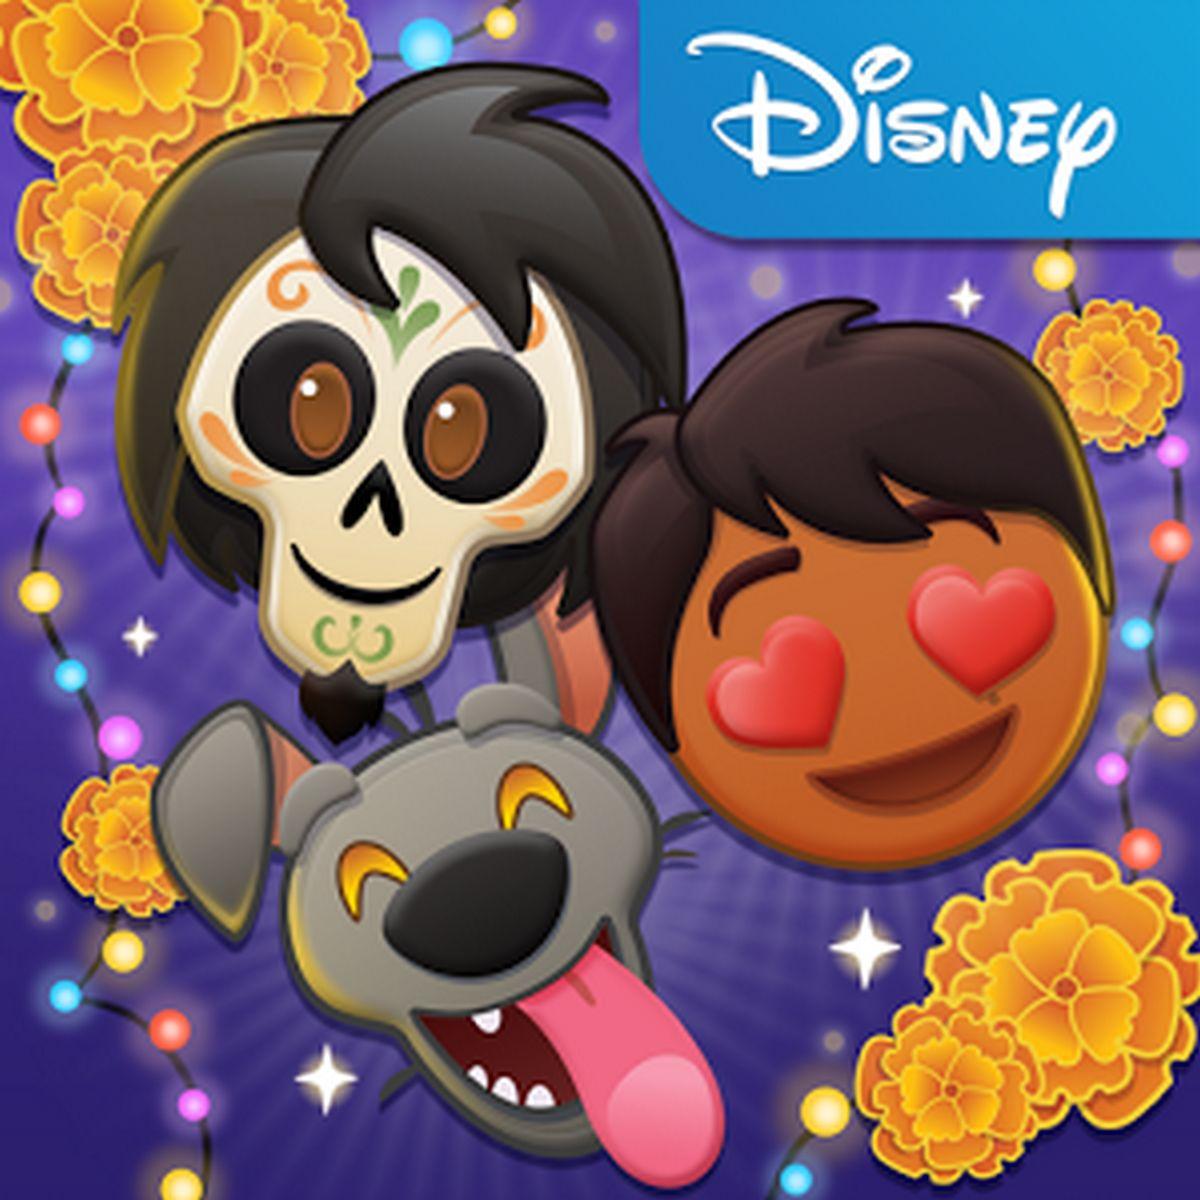 Disney Emoji Blitz with Pixar APK MOD